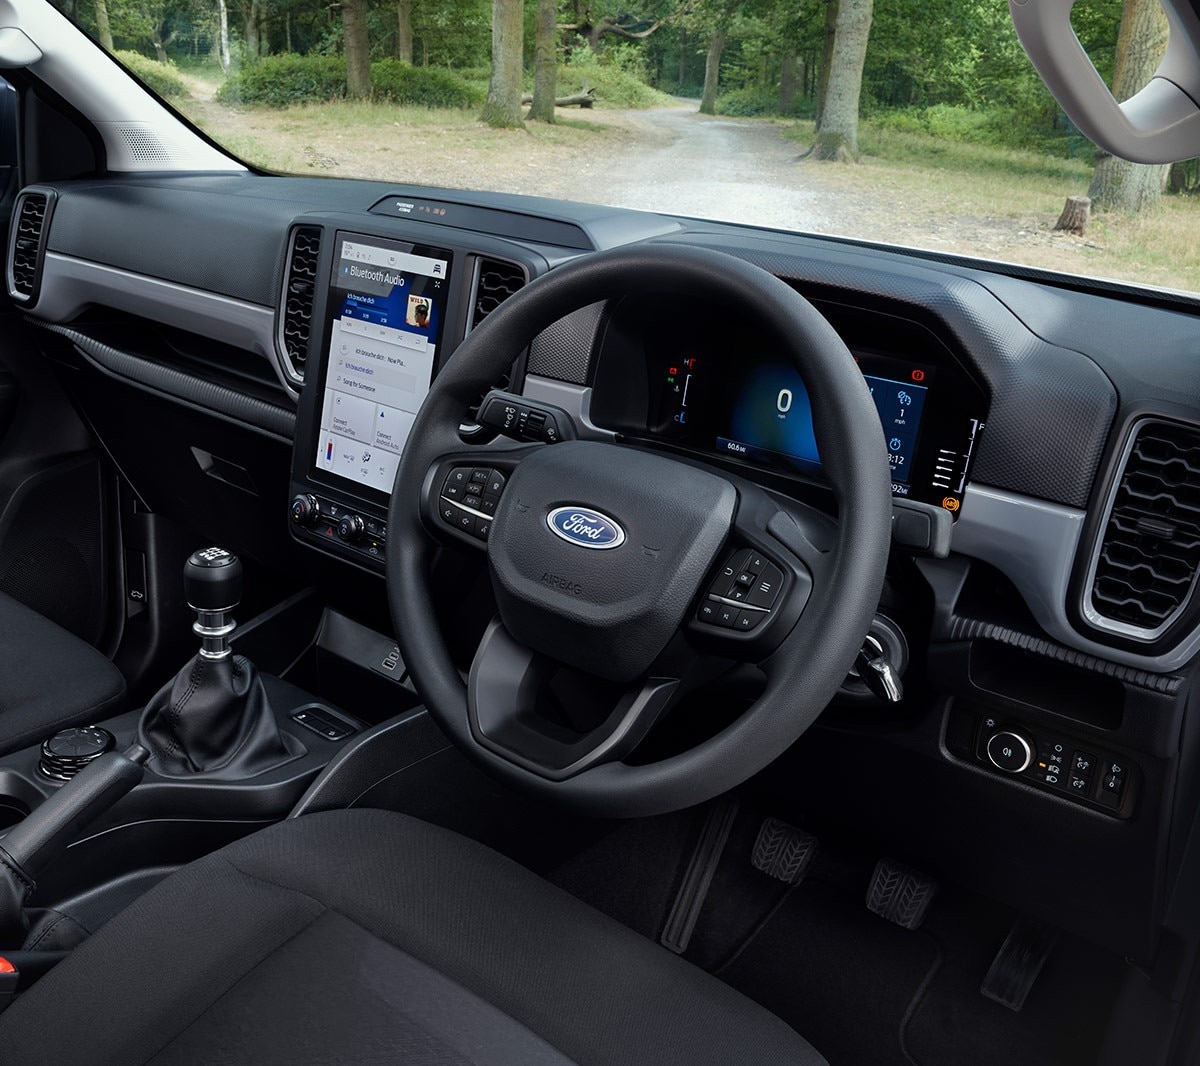 Ford Ranger interior dash view